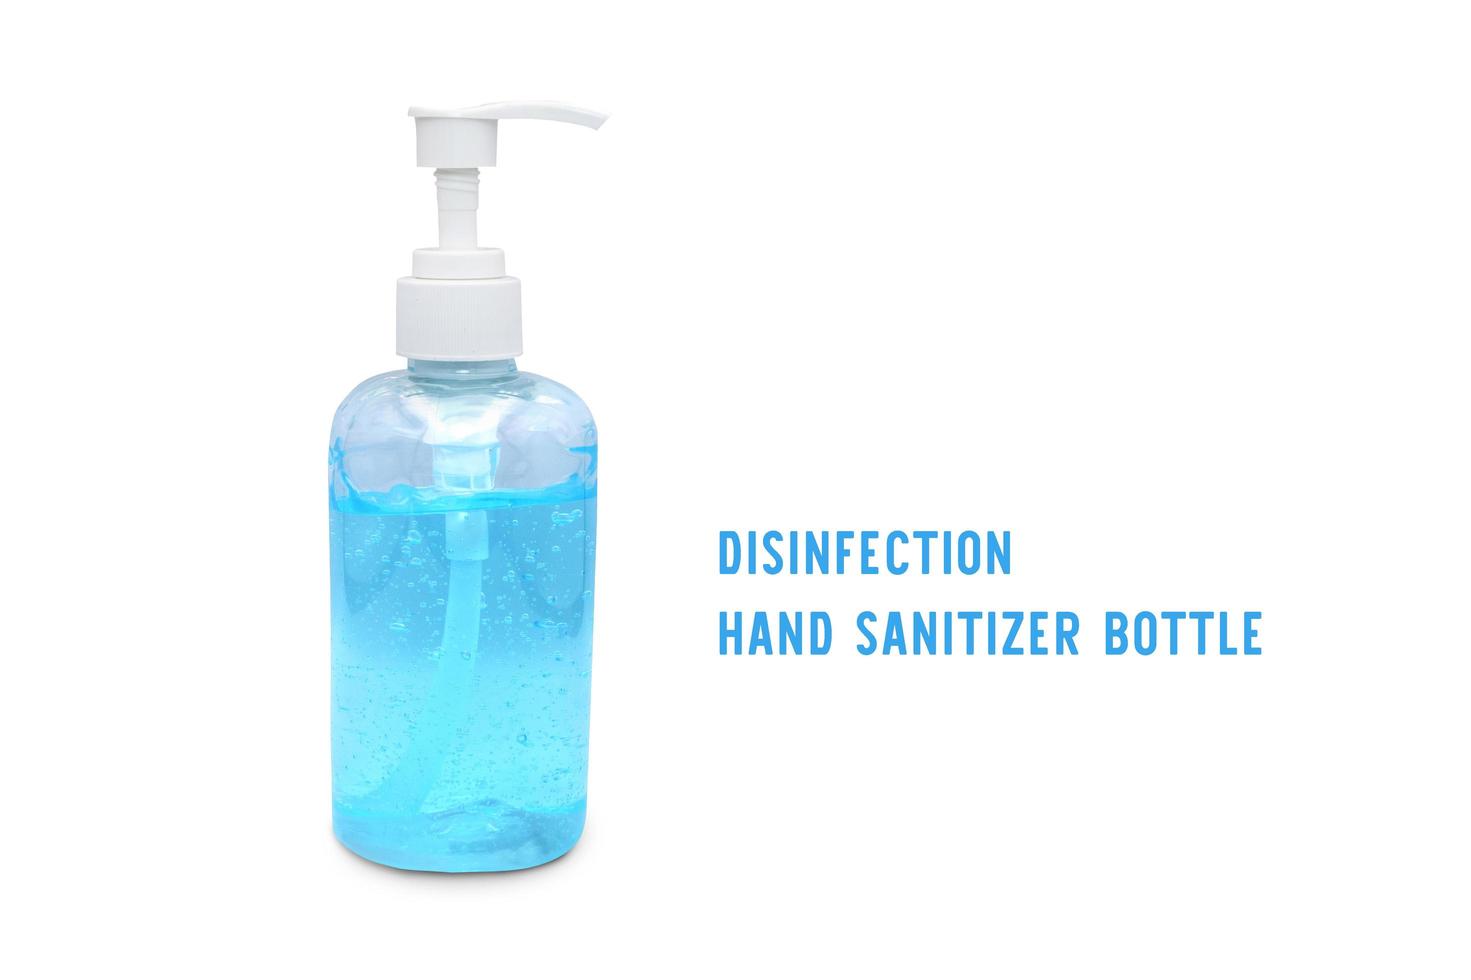 bomba desinfectante para manos los desinfectantes matan las bacterias foto